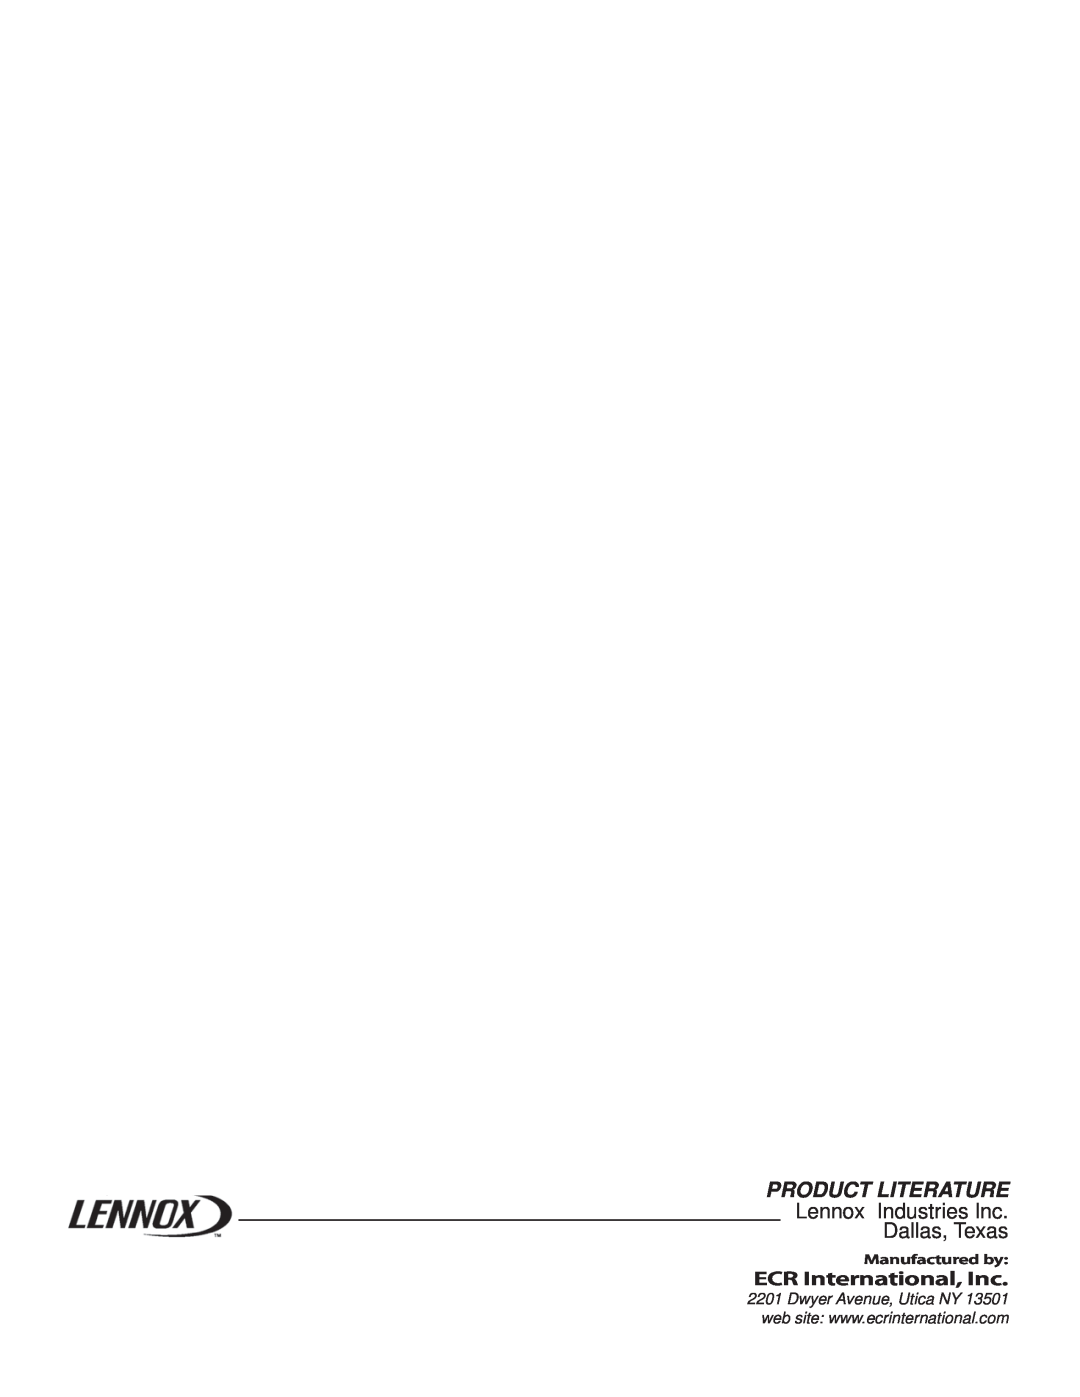 Lennox International Inc GWB8-245E-2 Product Literature, Lennox Industries Inc. Dallas, Texas, ECR International, Inc 